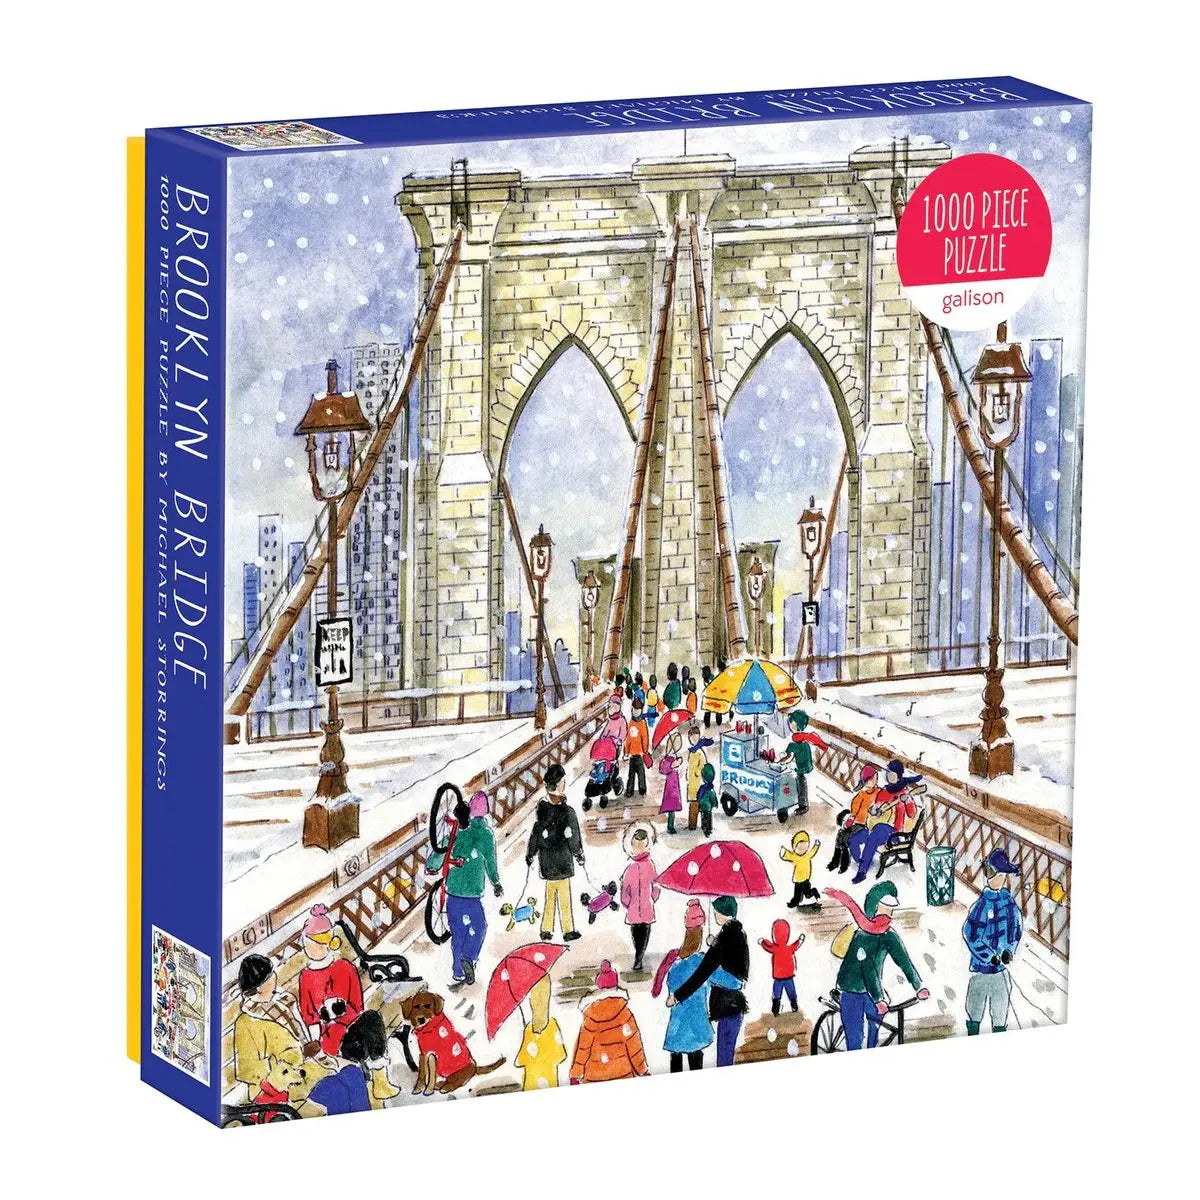 Hachette Michael Storrings Brooklyn Bridge Puzzle 1000 Piece Galison